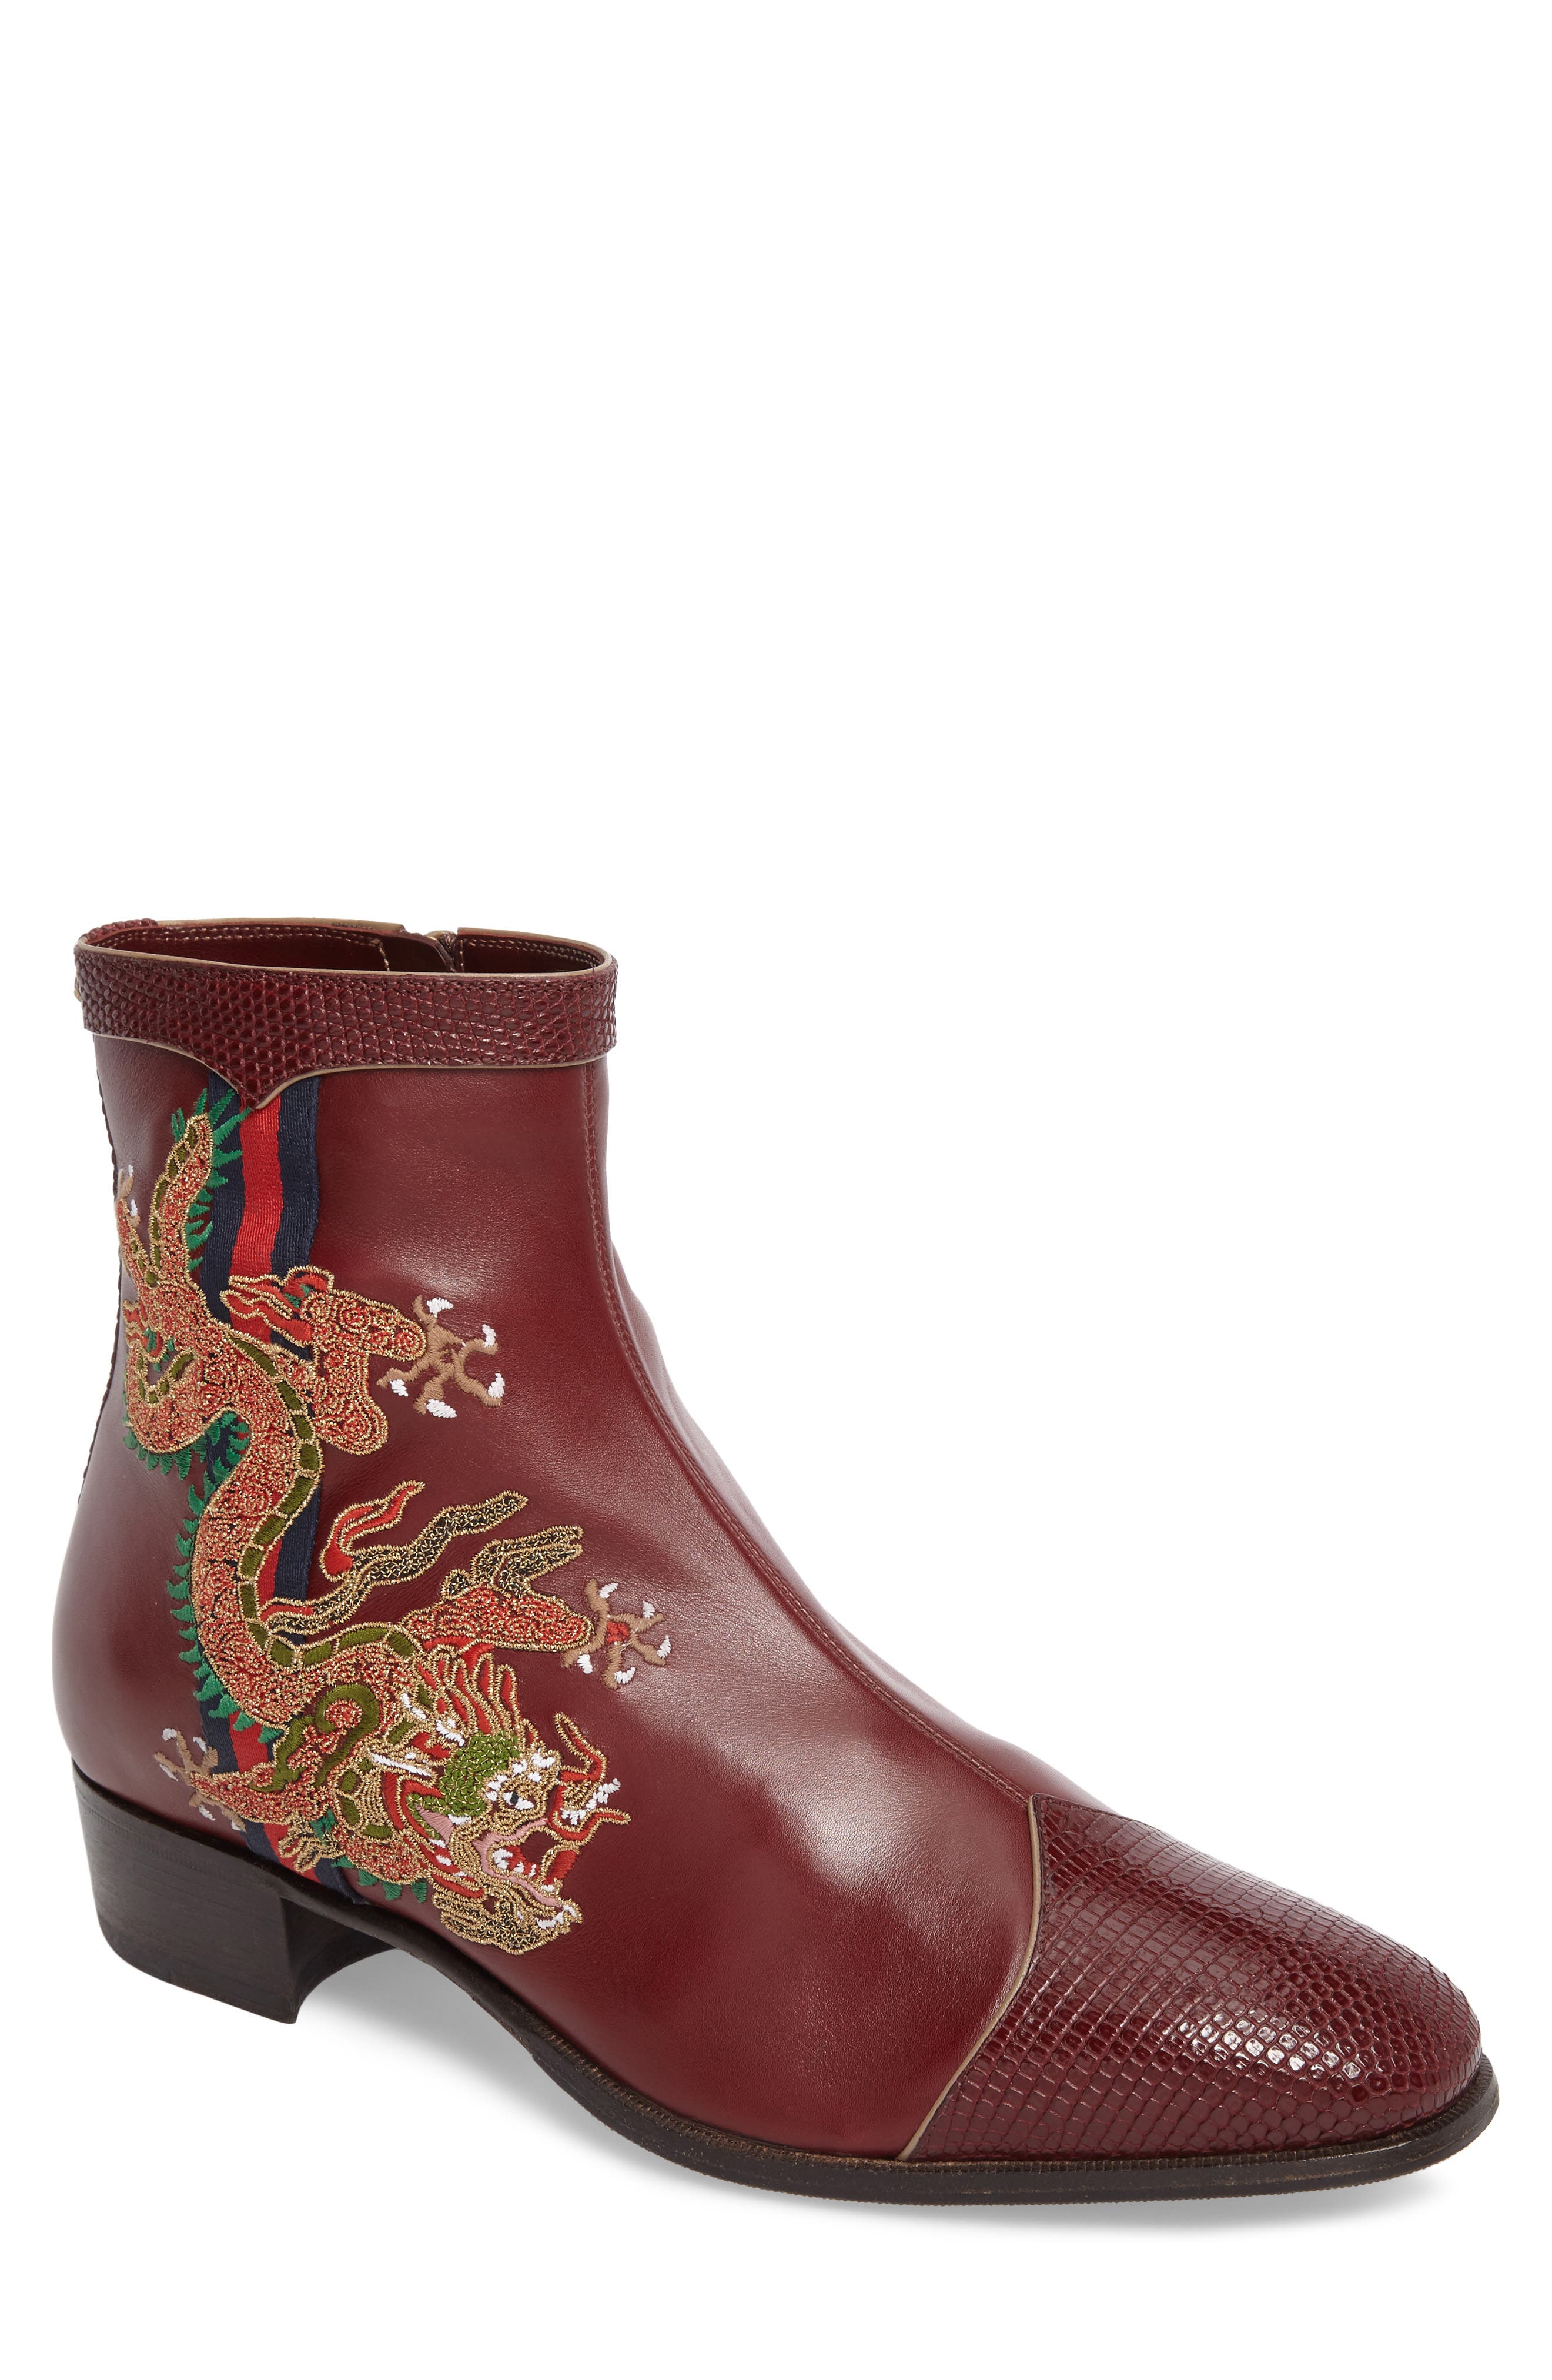 gucci boots dragon